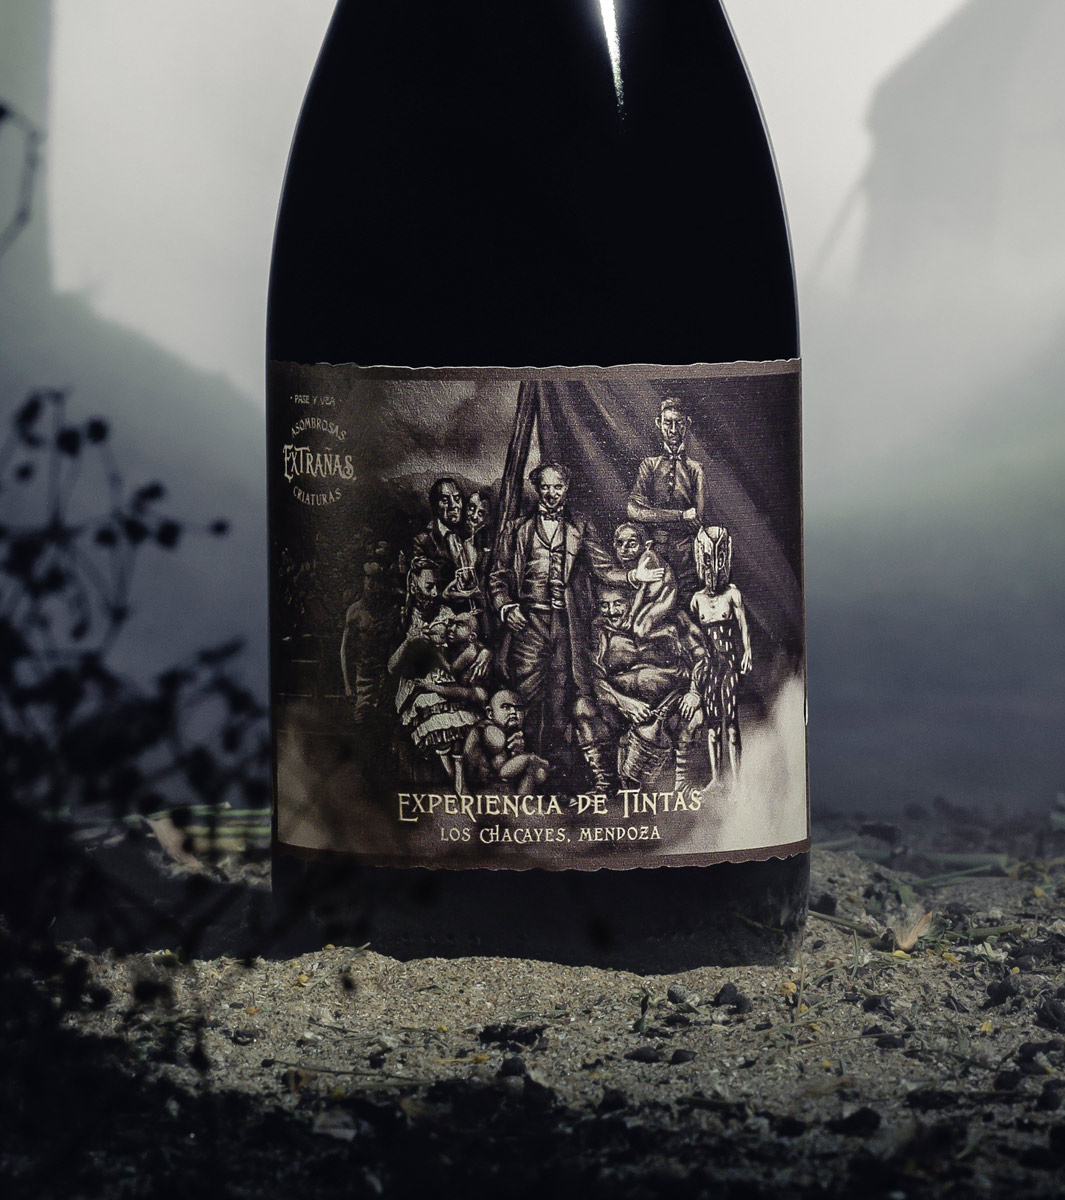 Le Montreur Malbec wine label design illustration Mendoza Argentina dark circus black and white